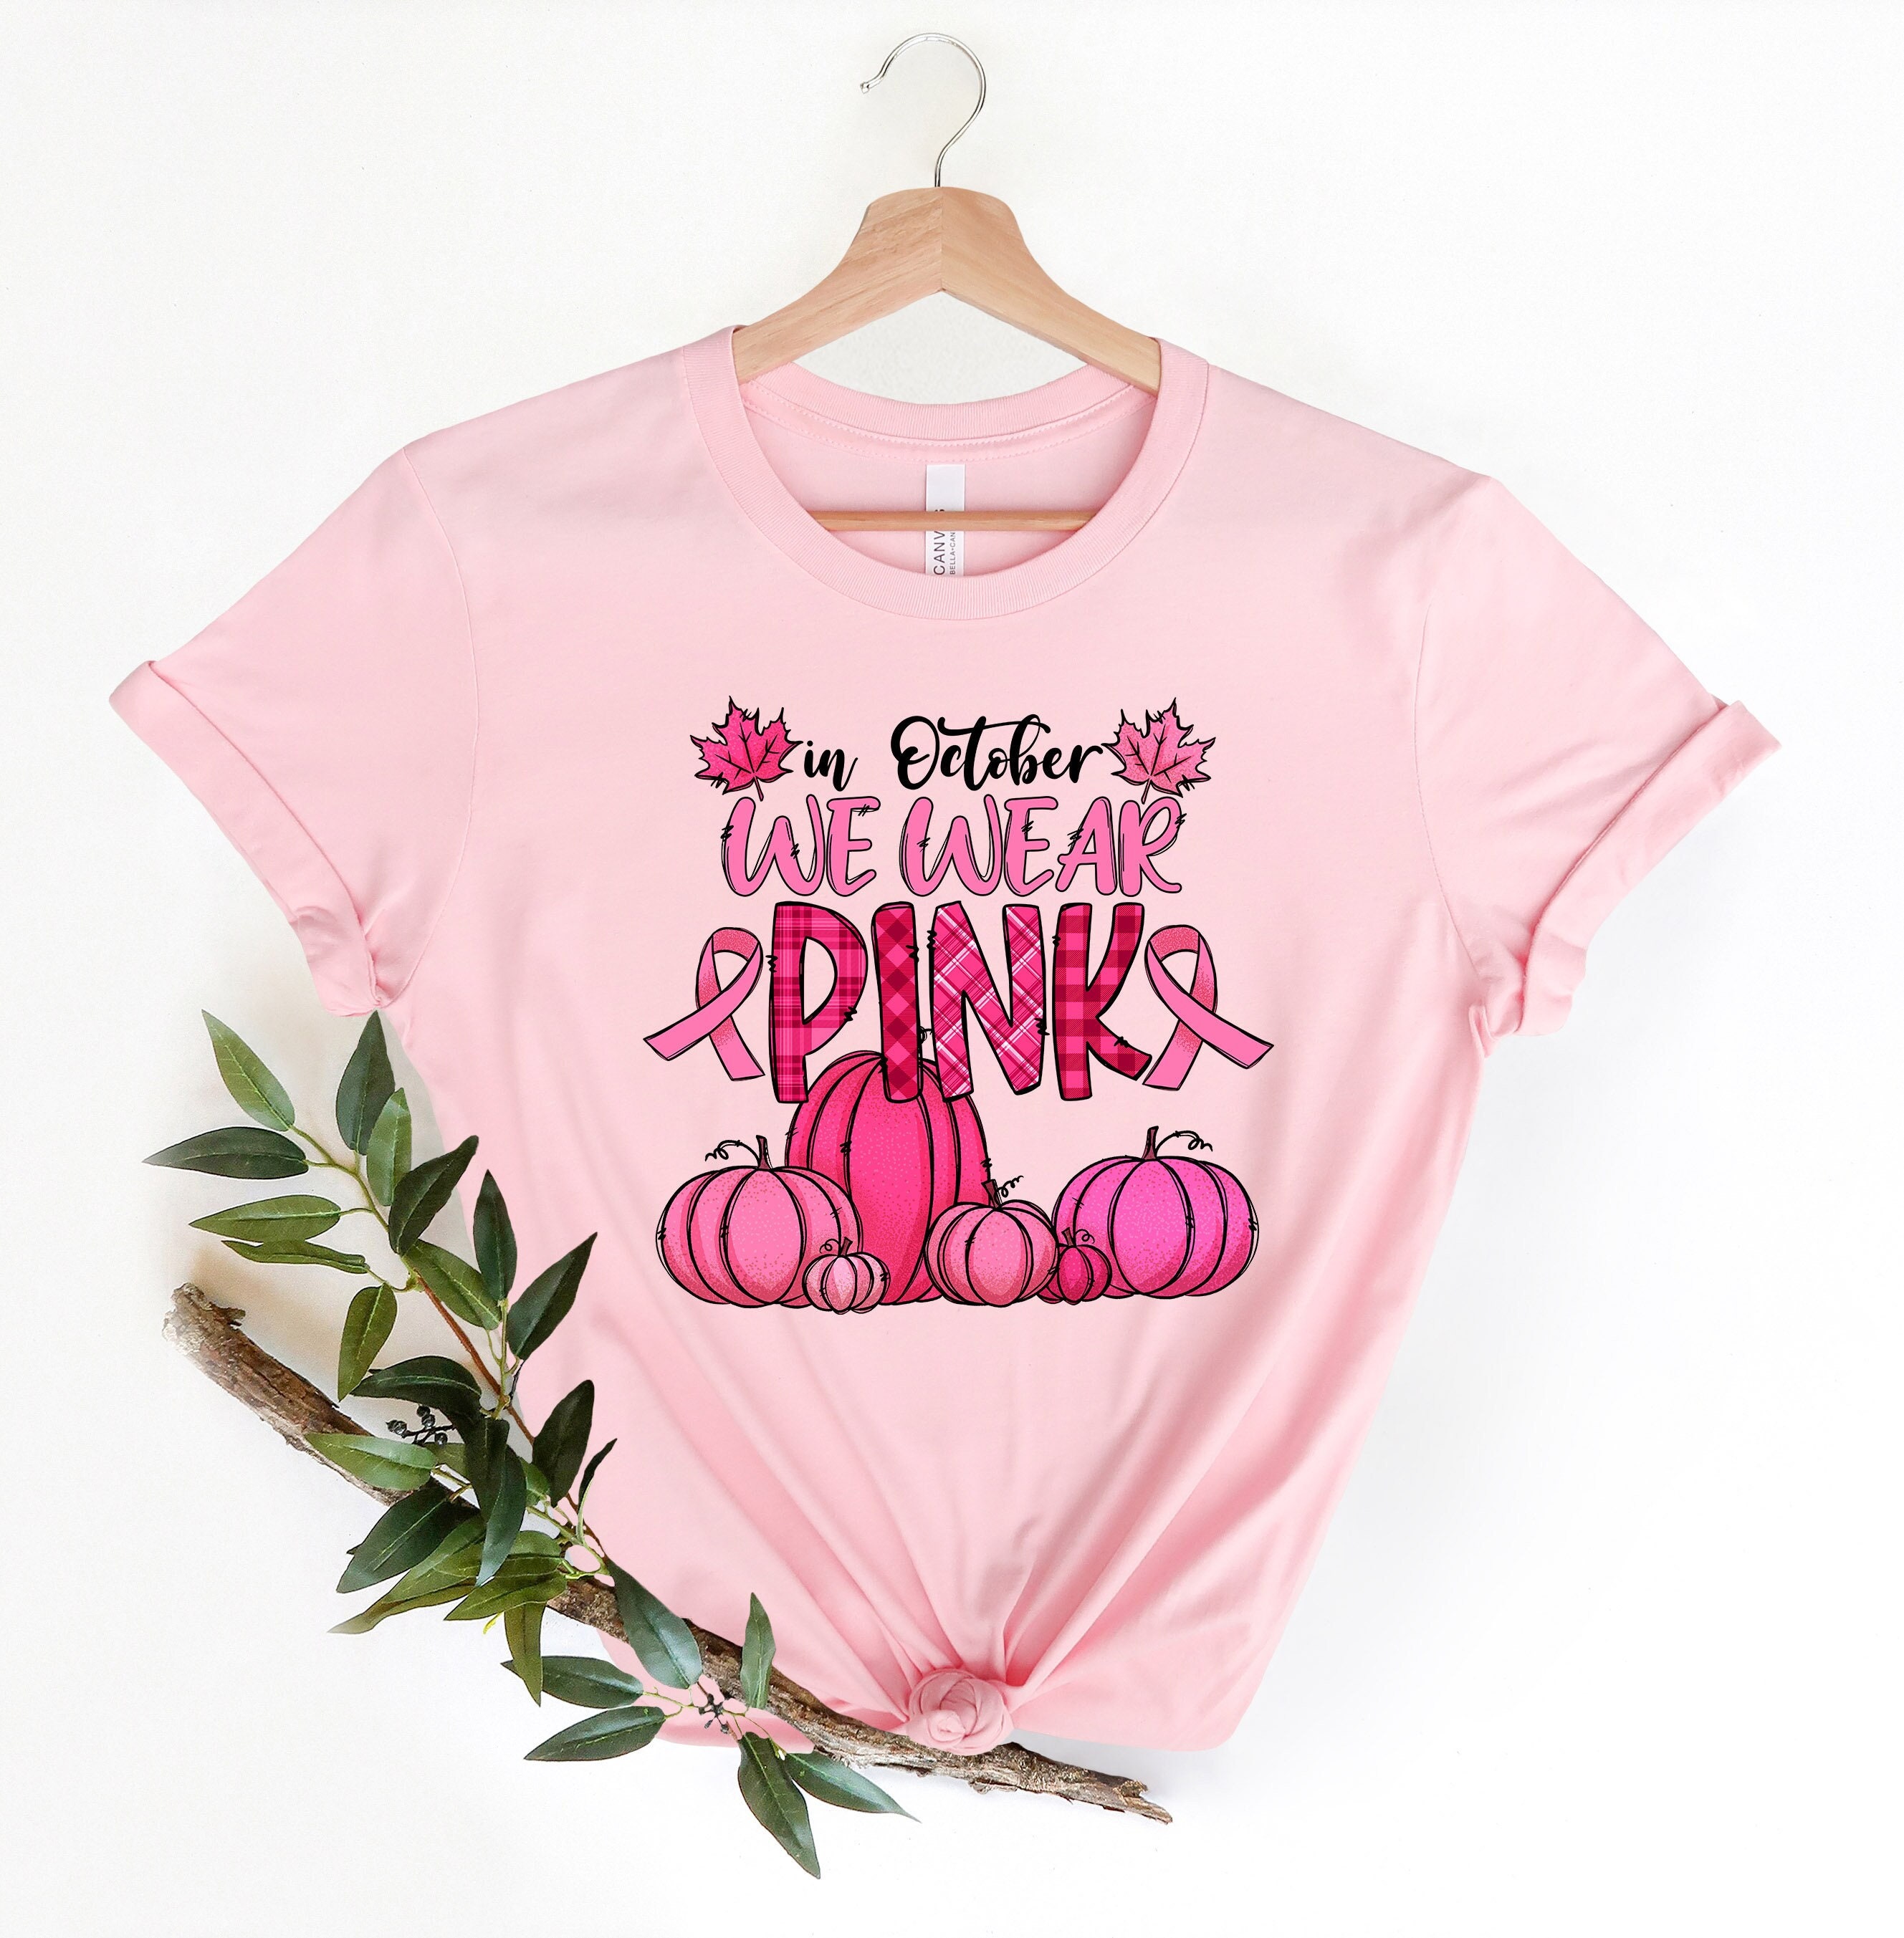 In October We Wear Pink Shirt Breast Cancer Awareness Shirt Pink